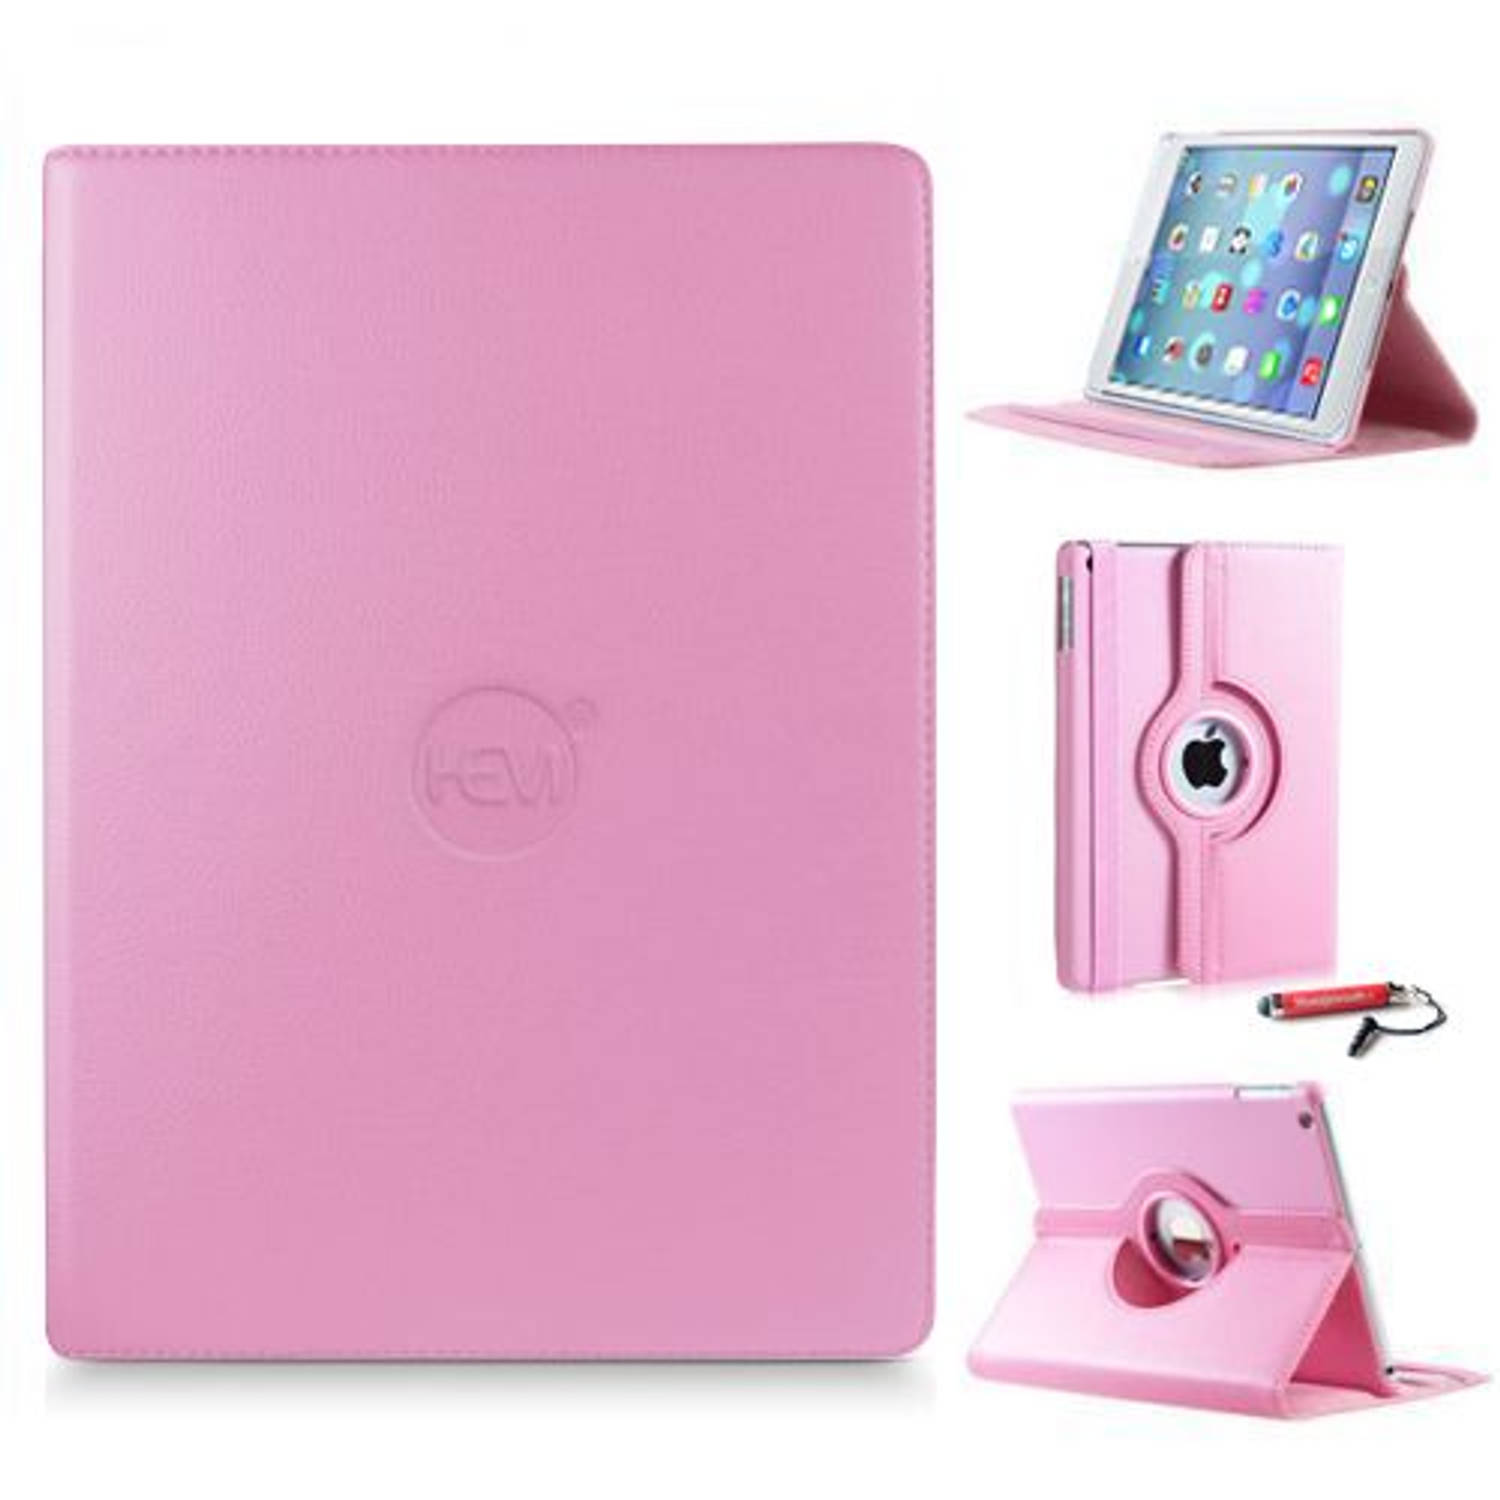 iPad Pro 10.5 hoes HEM licht roze / iPad hoes licht roze / hoes iPad Pro 10.5 licht roze - Ipad hoes, Tablethoes